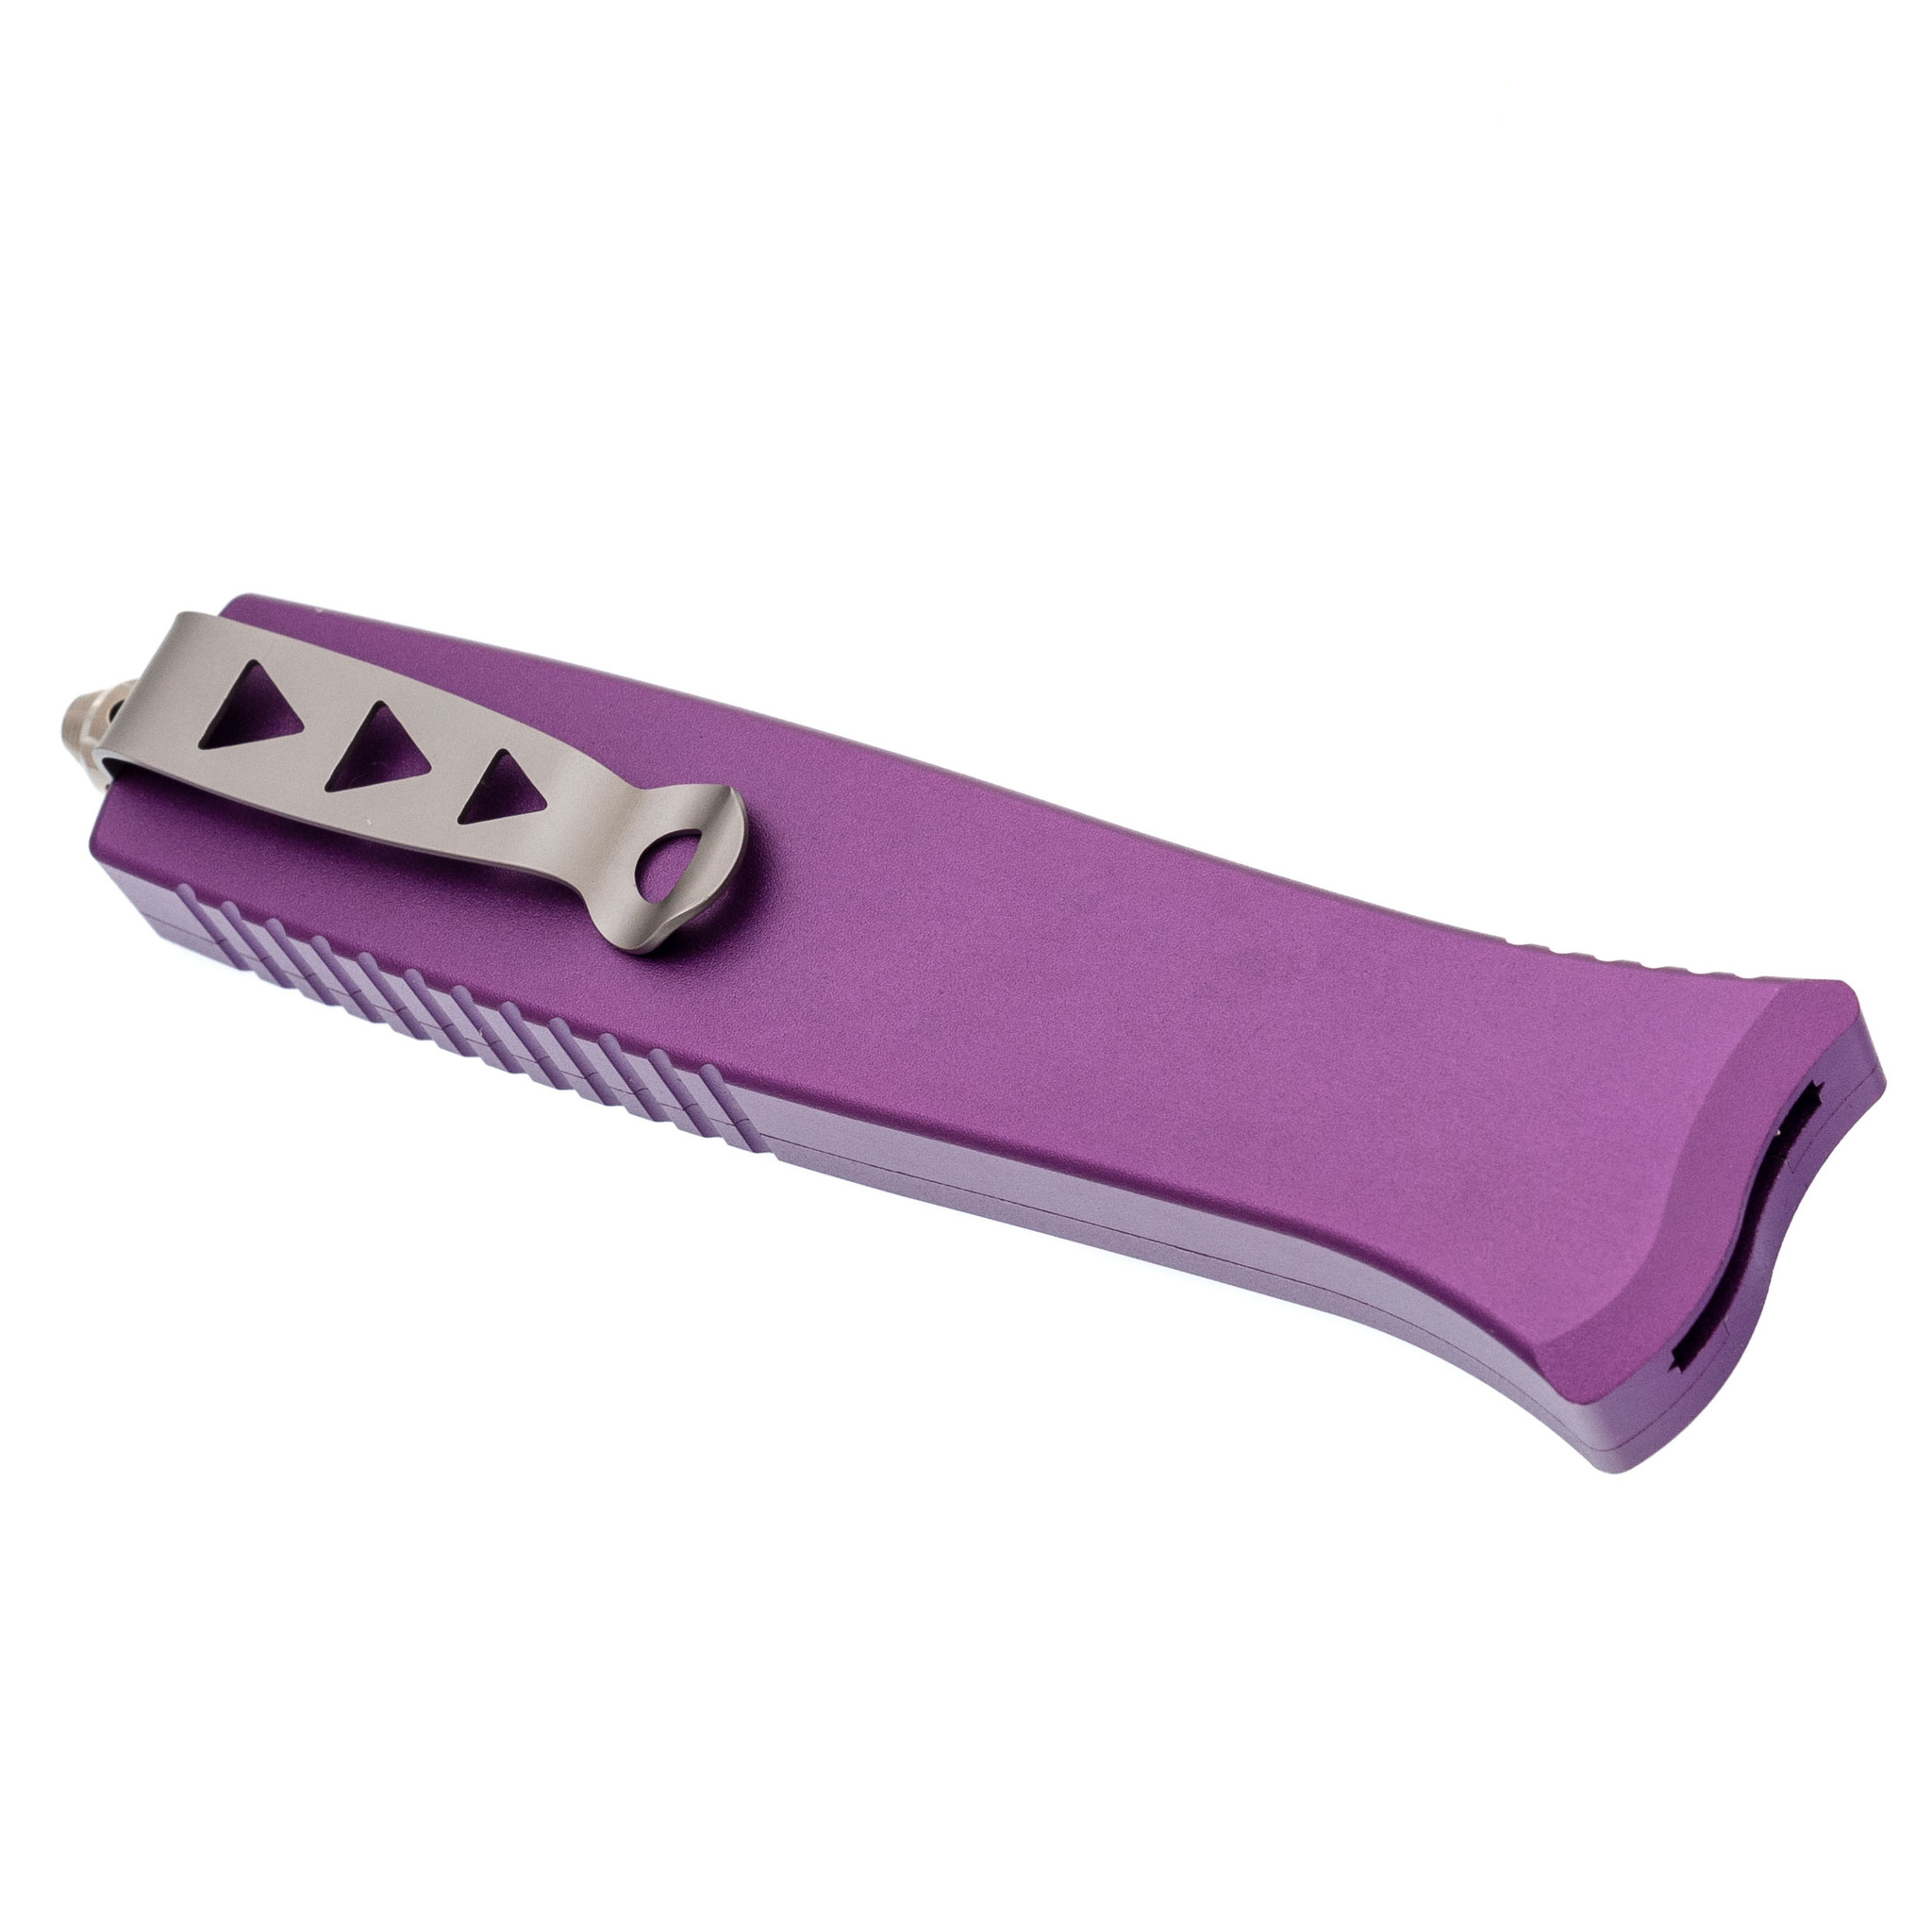 Автоматический нож Steelclaw Аргон-03, сталь D2, рукоять алюминий, фиолетовый - фото 5